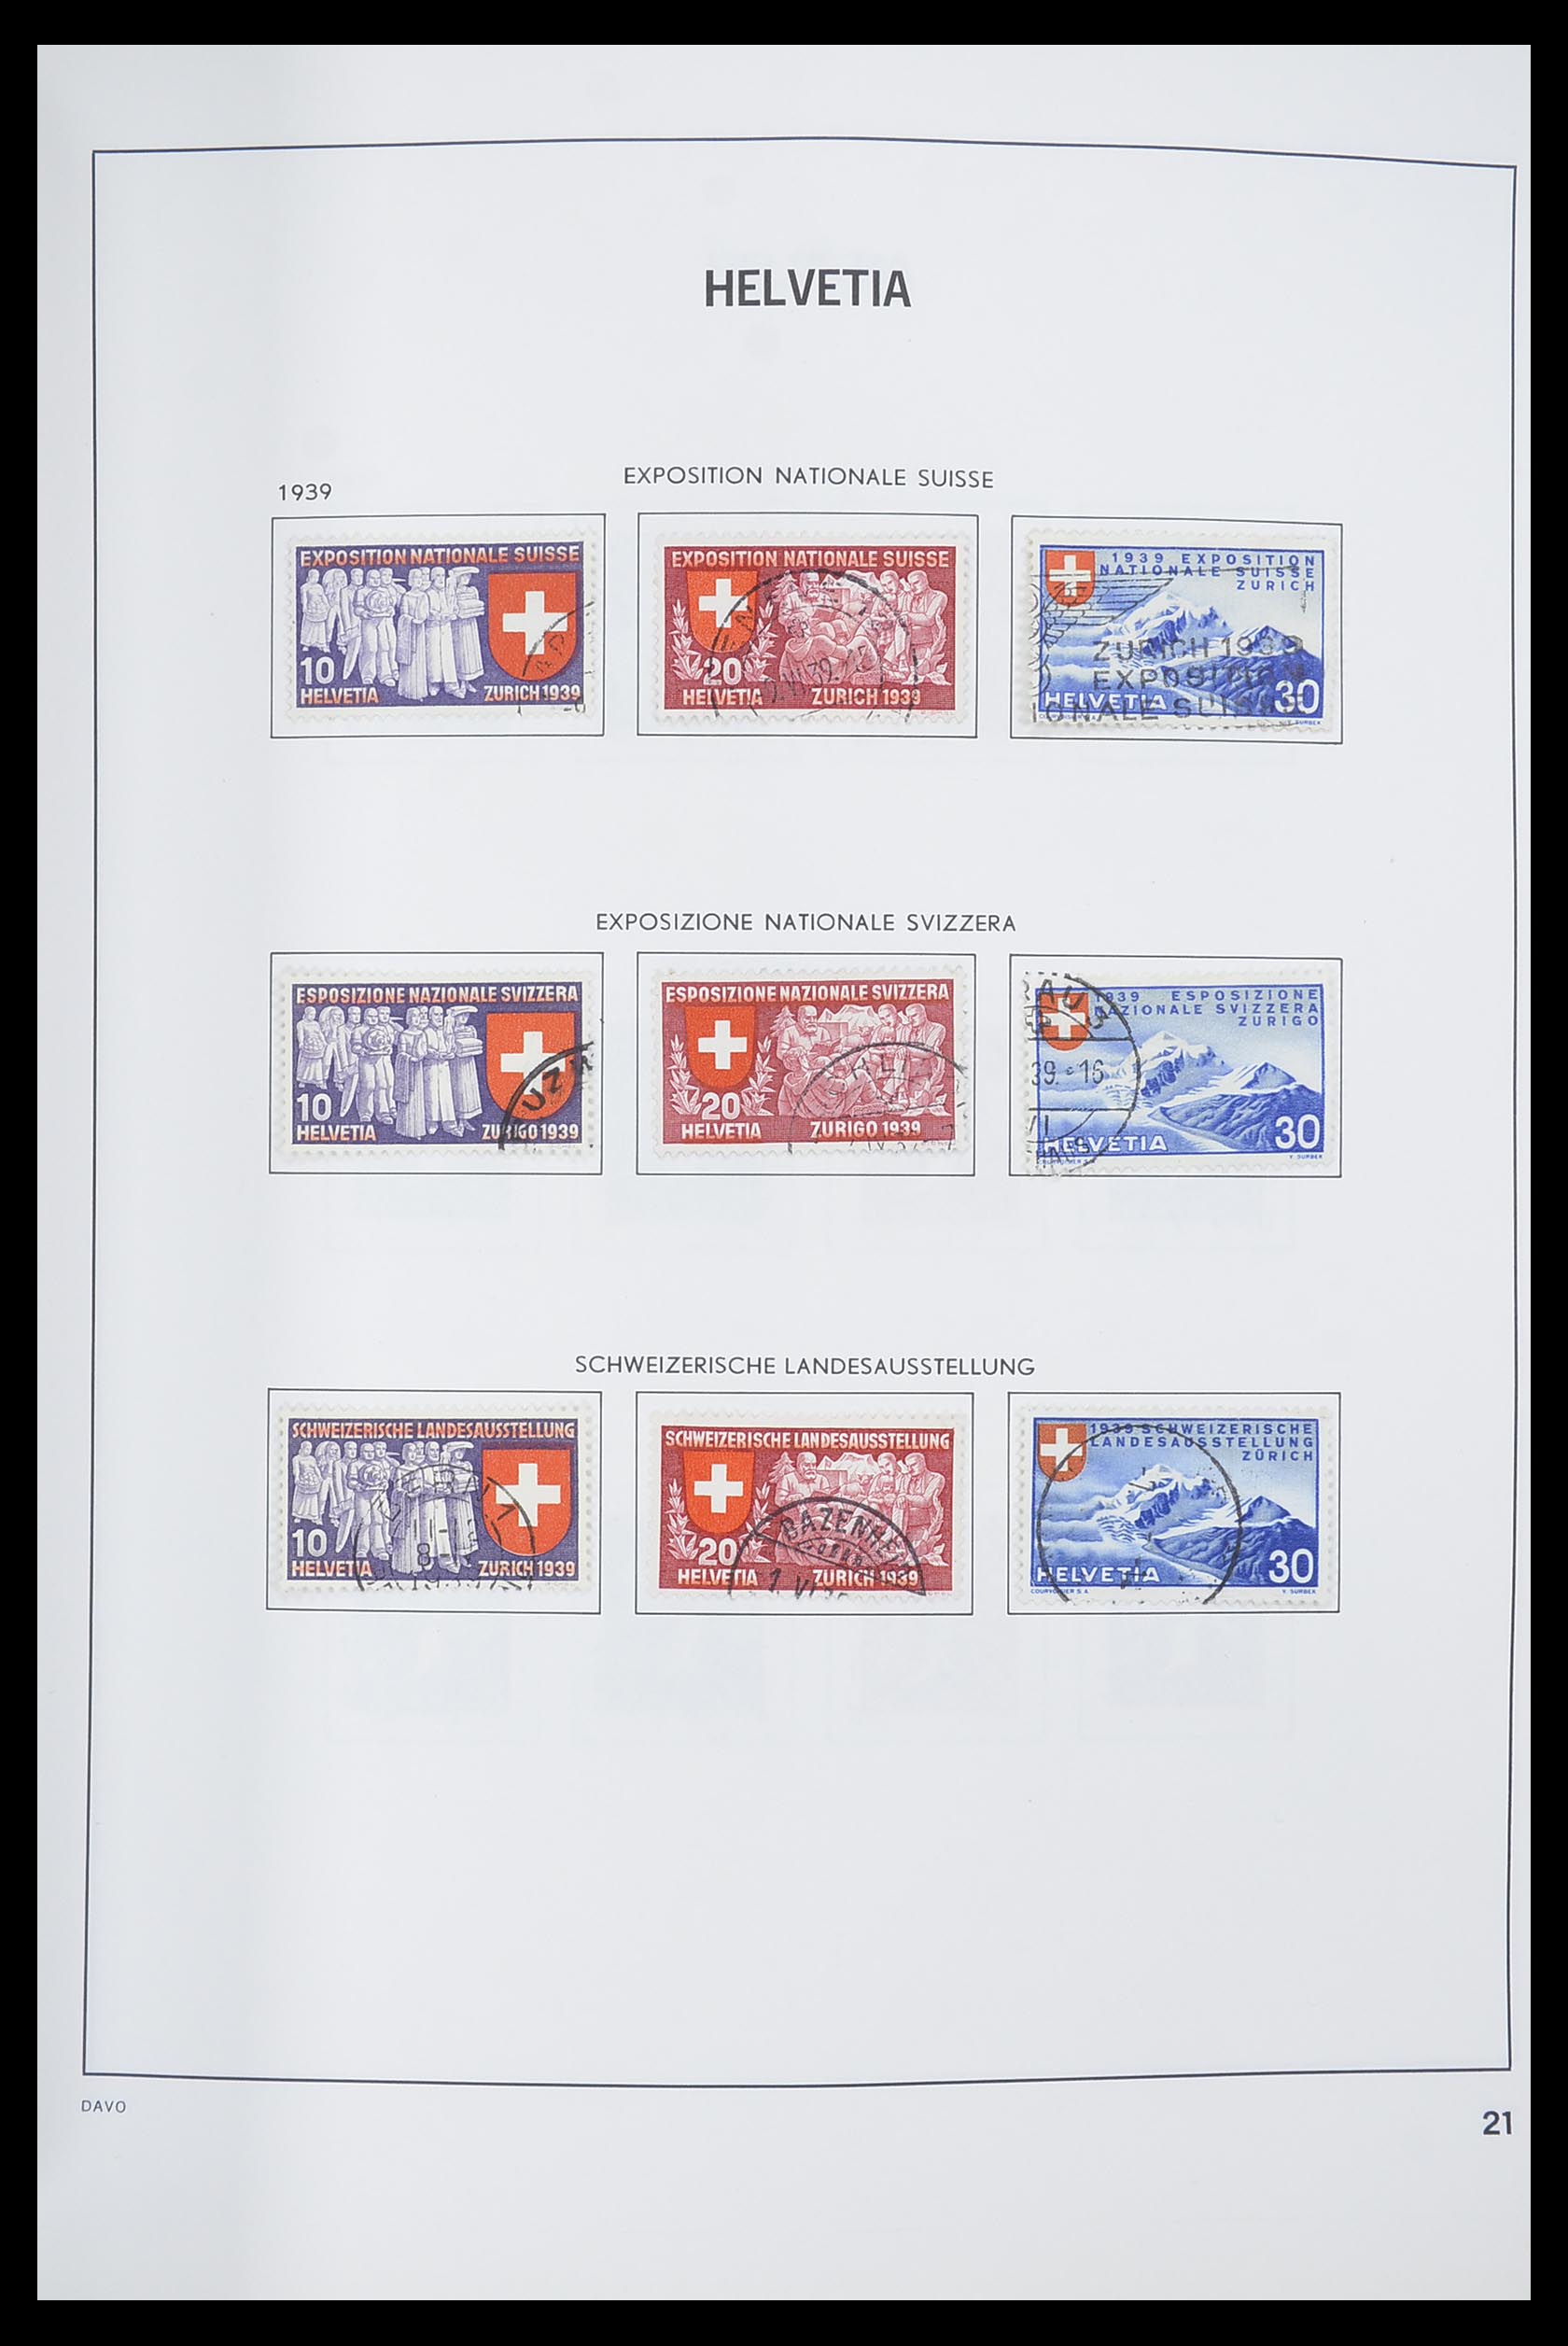 33559 022 - Stamp collection 33559 Switzerland 1850-2000.